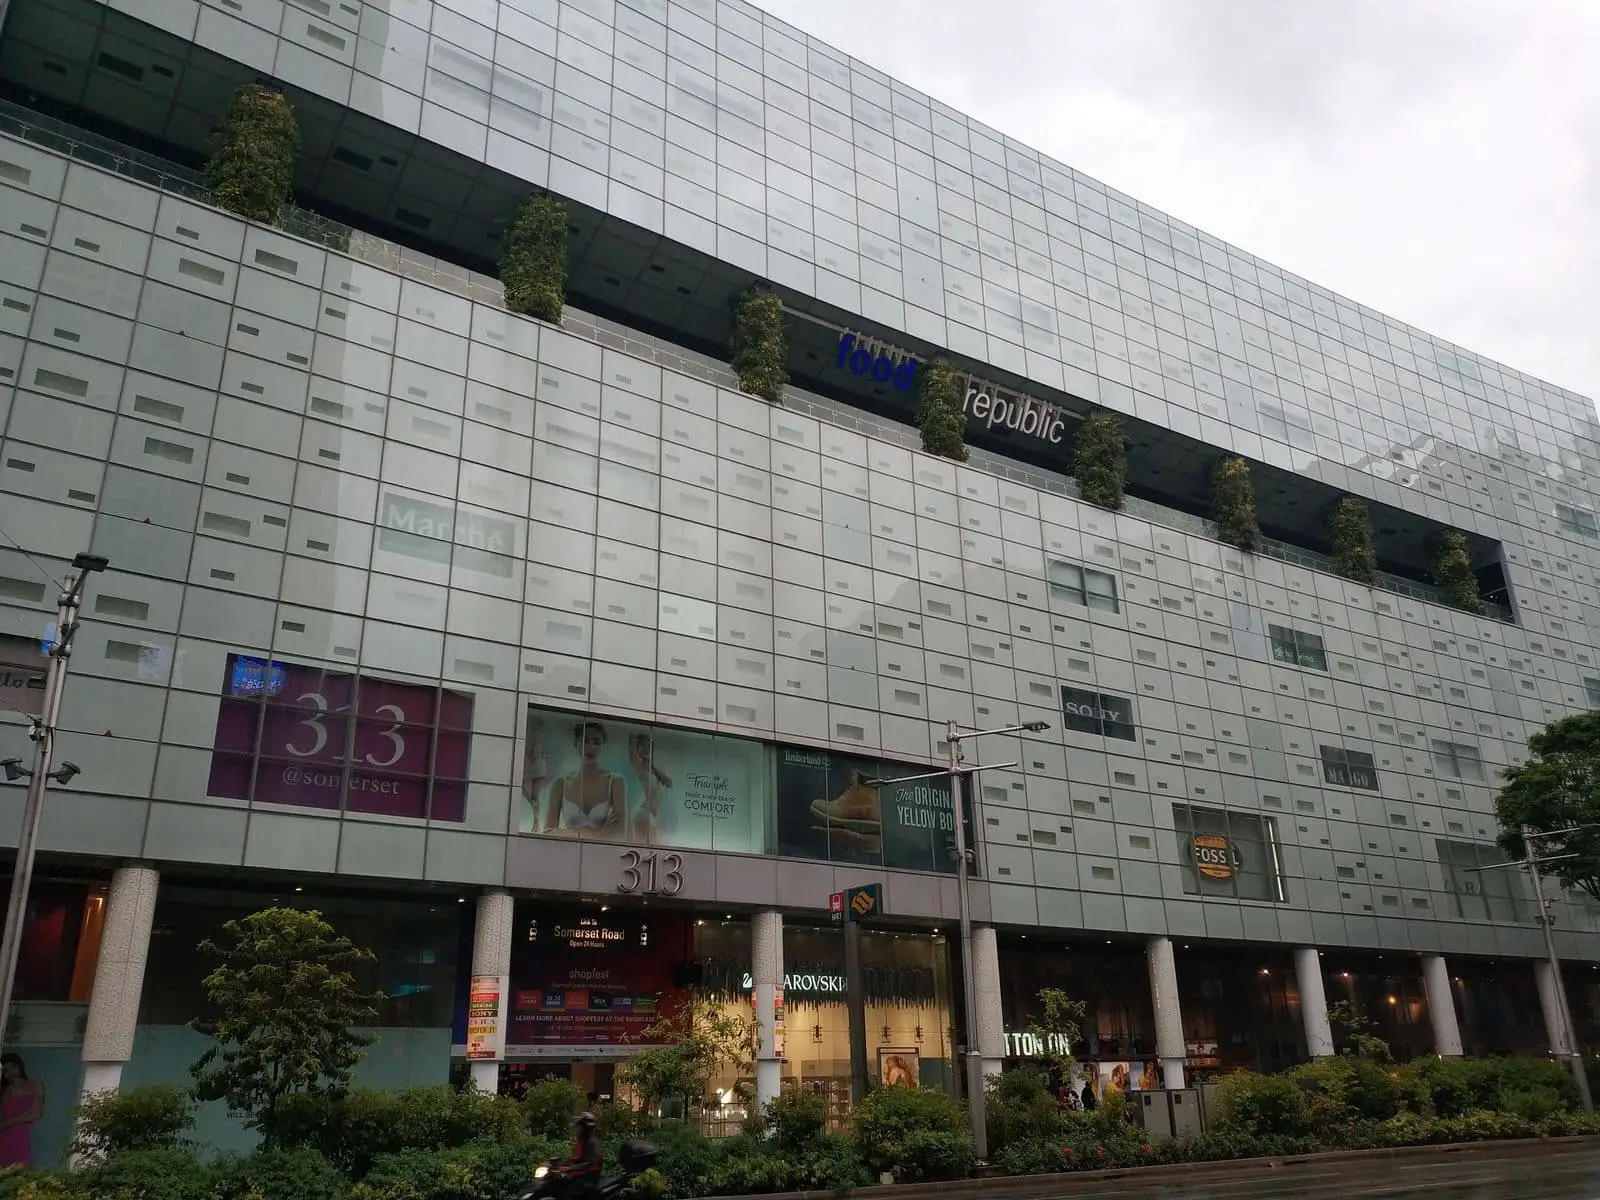 somerset mall singapore